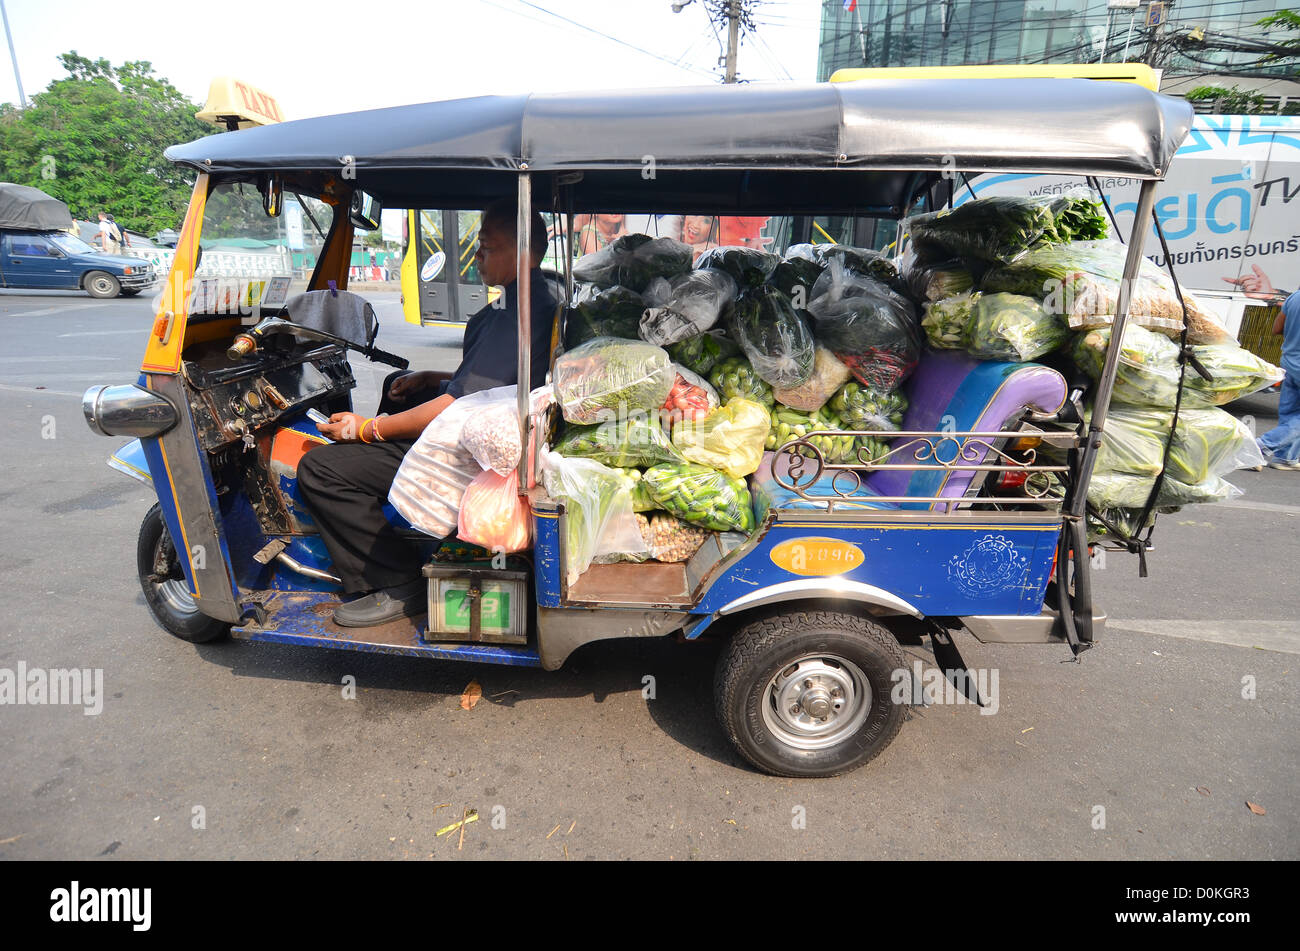 A tuk-tuk in Bangkok loaded with vegetables. Stock Photo